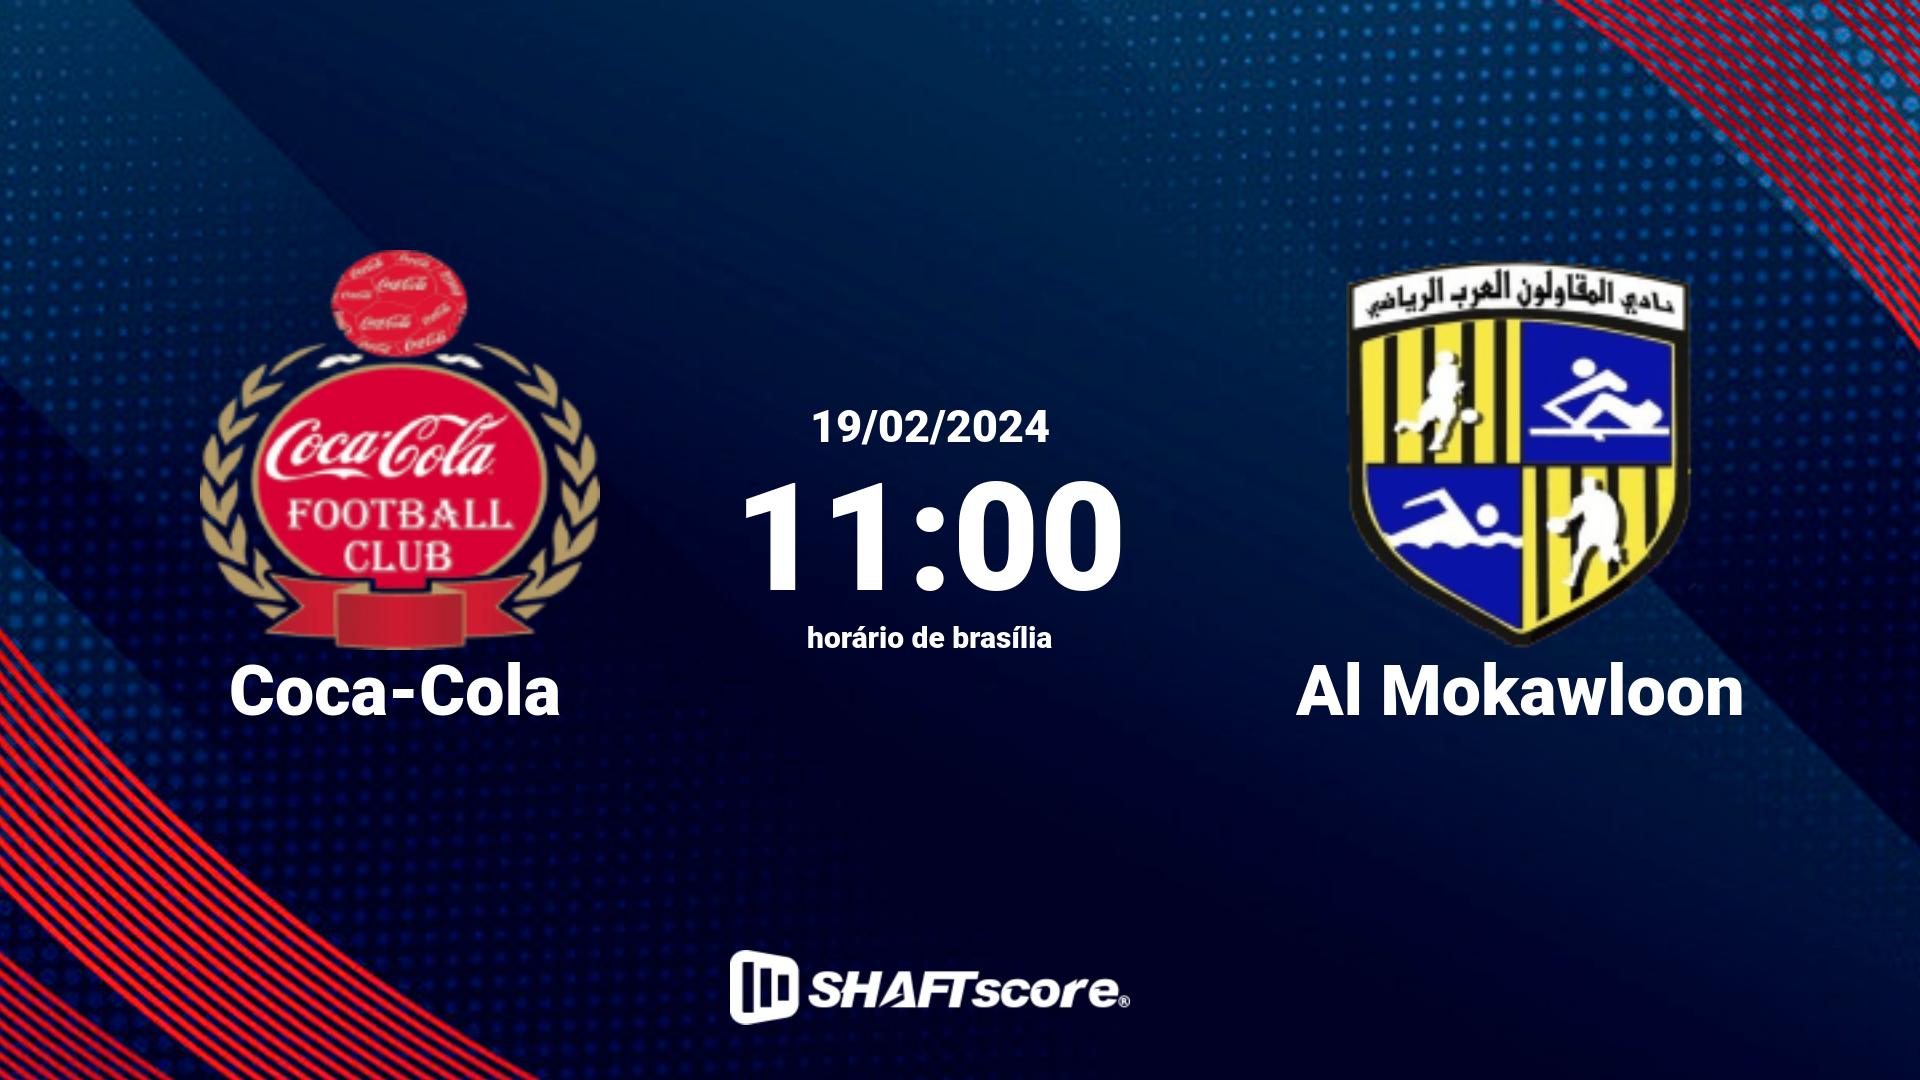 Estatísticas do jogo Coca-Cola vs Al Mokawloon 19.02 11:00